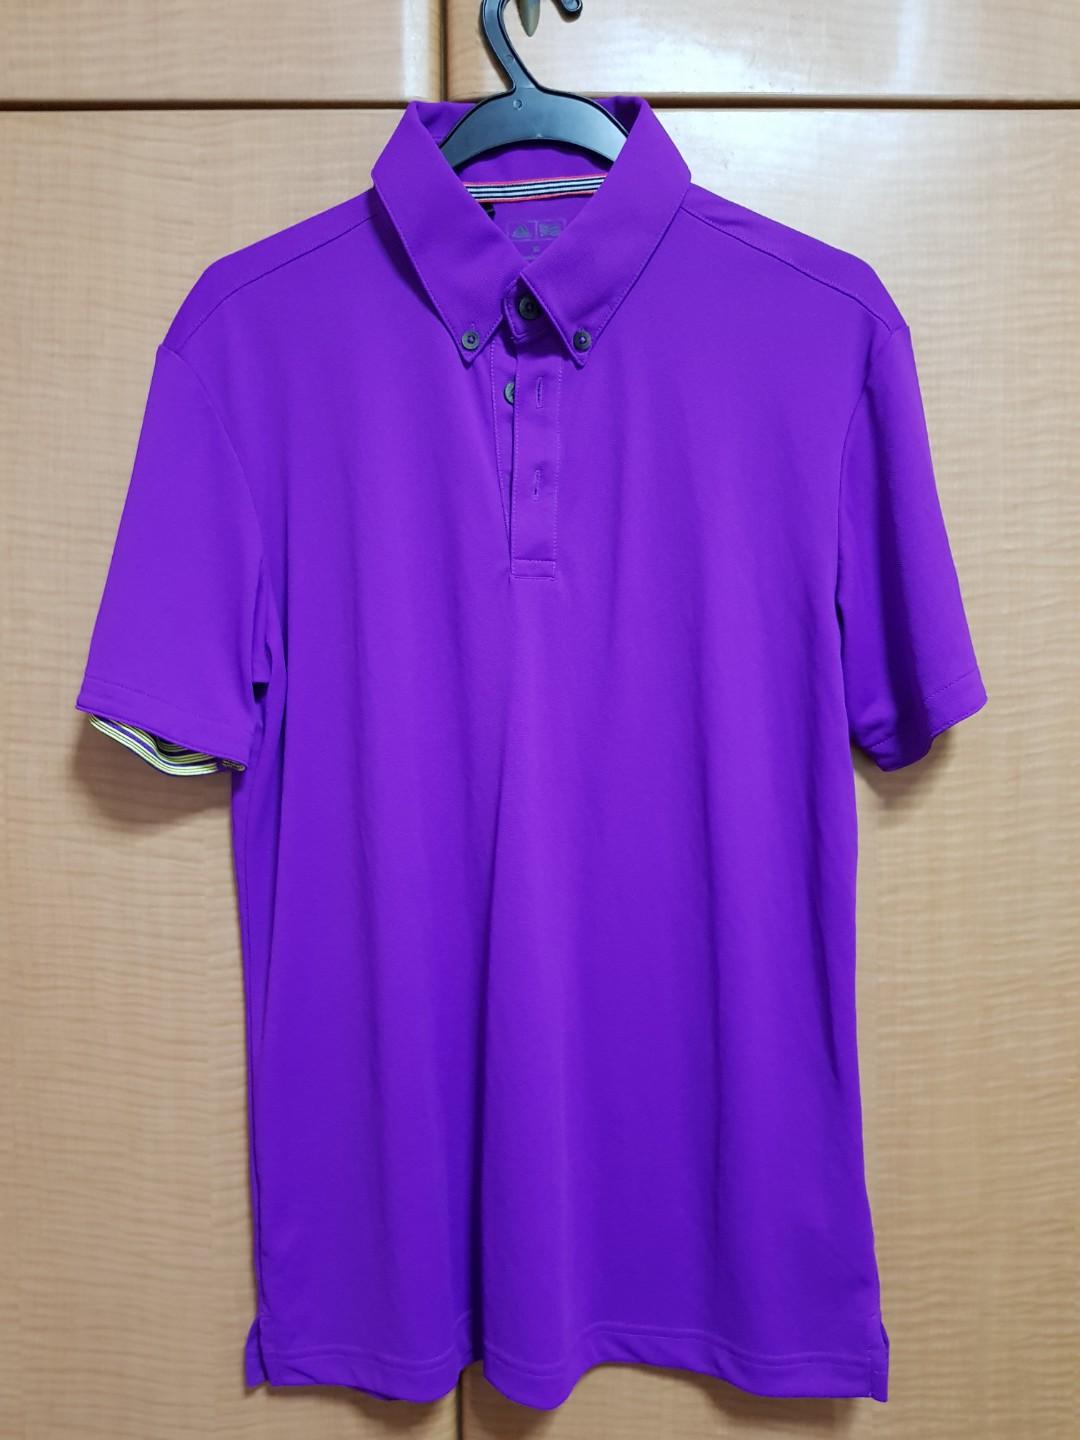 purple adidas golf shirt